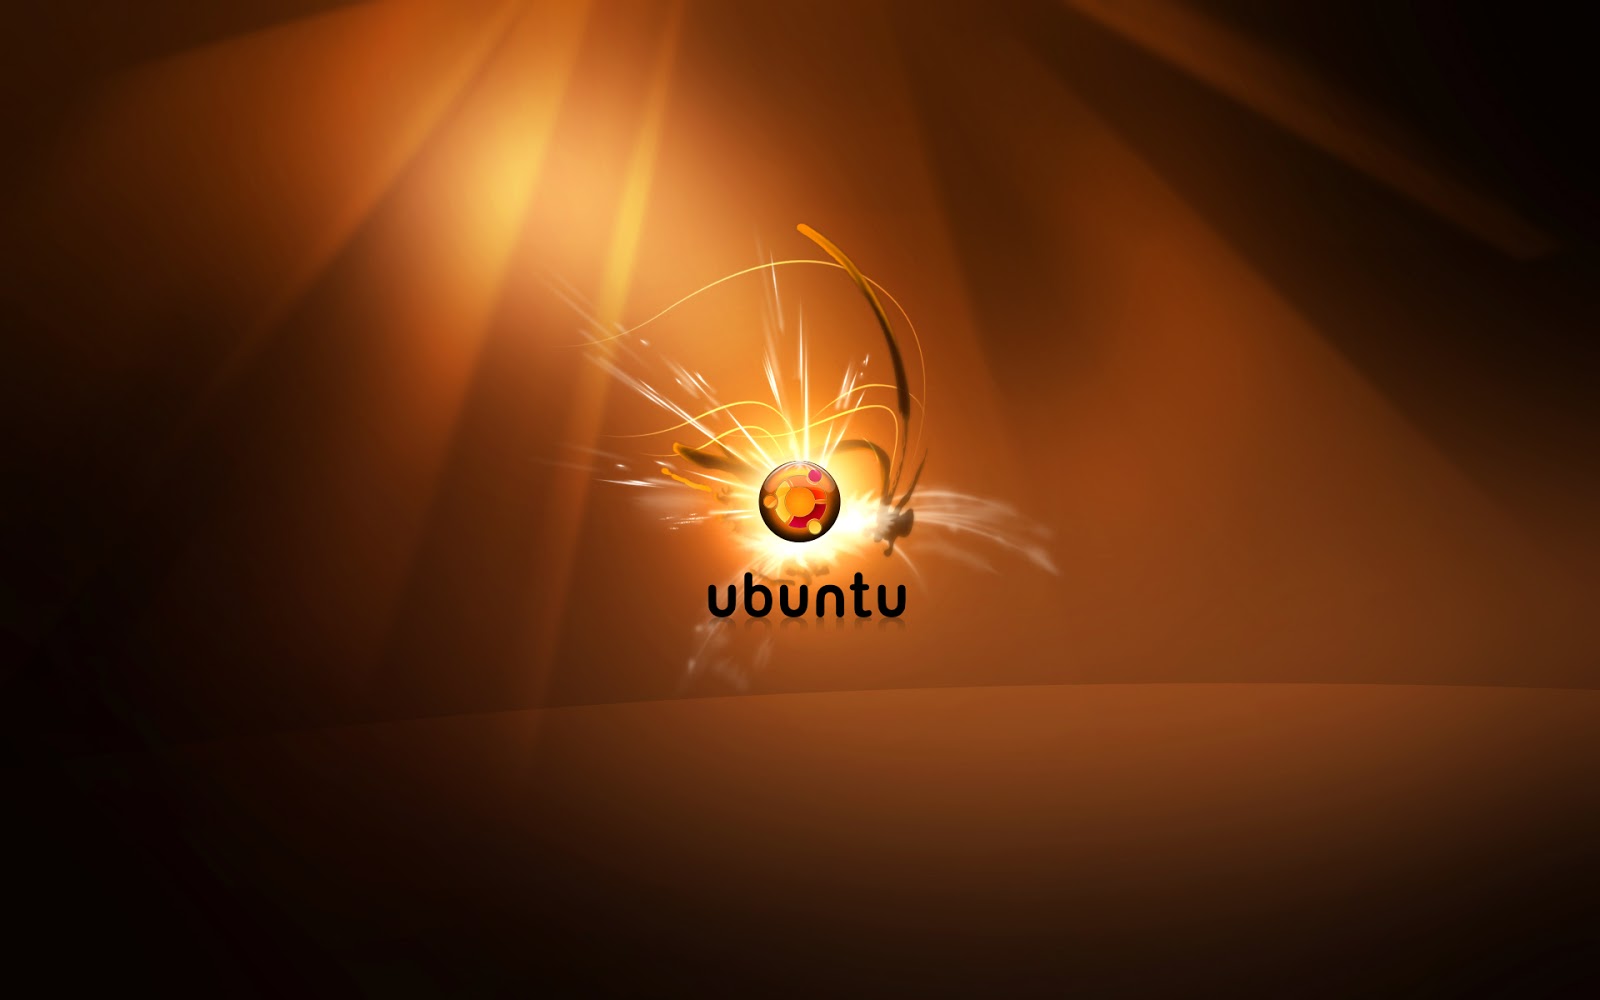 Ubuntu Wallpaper HD Best